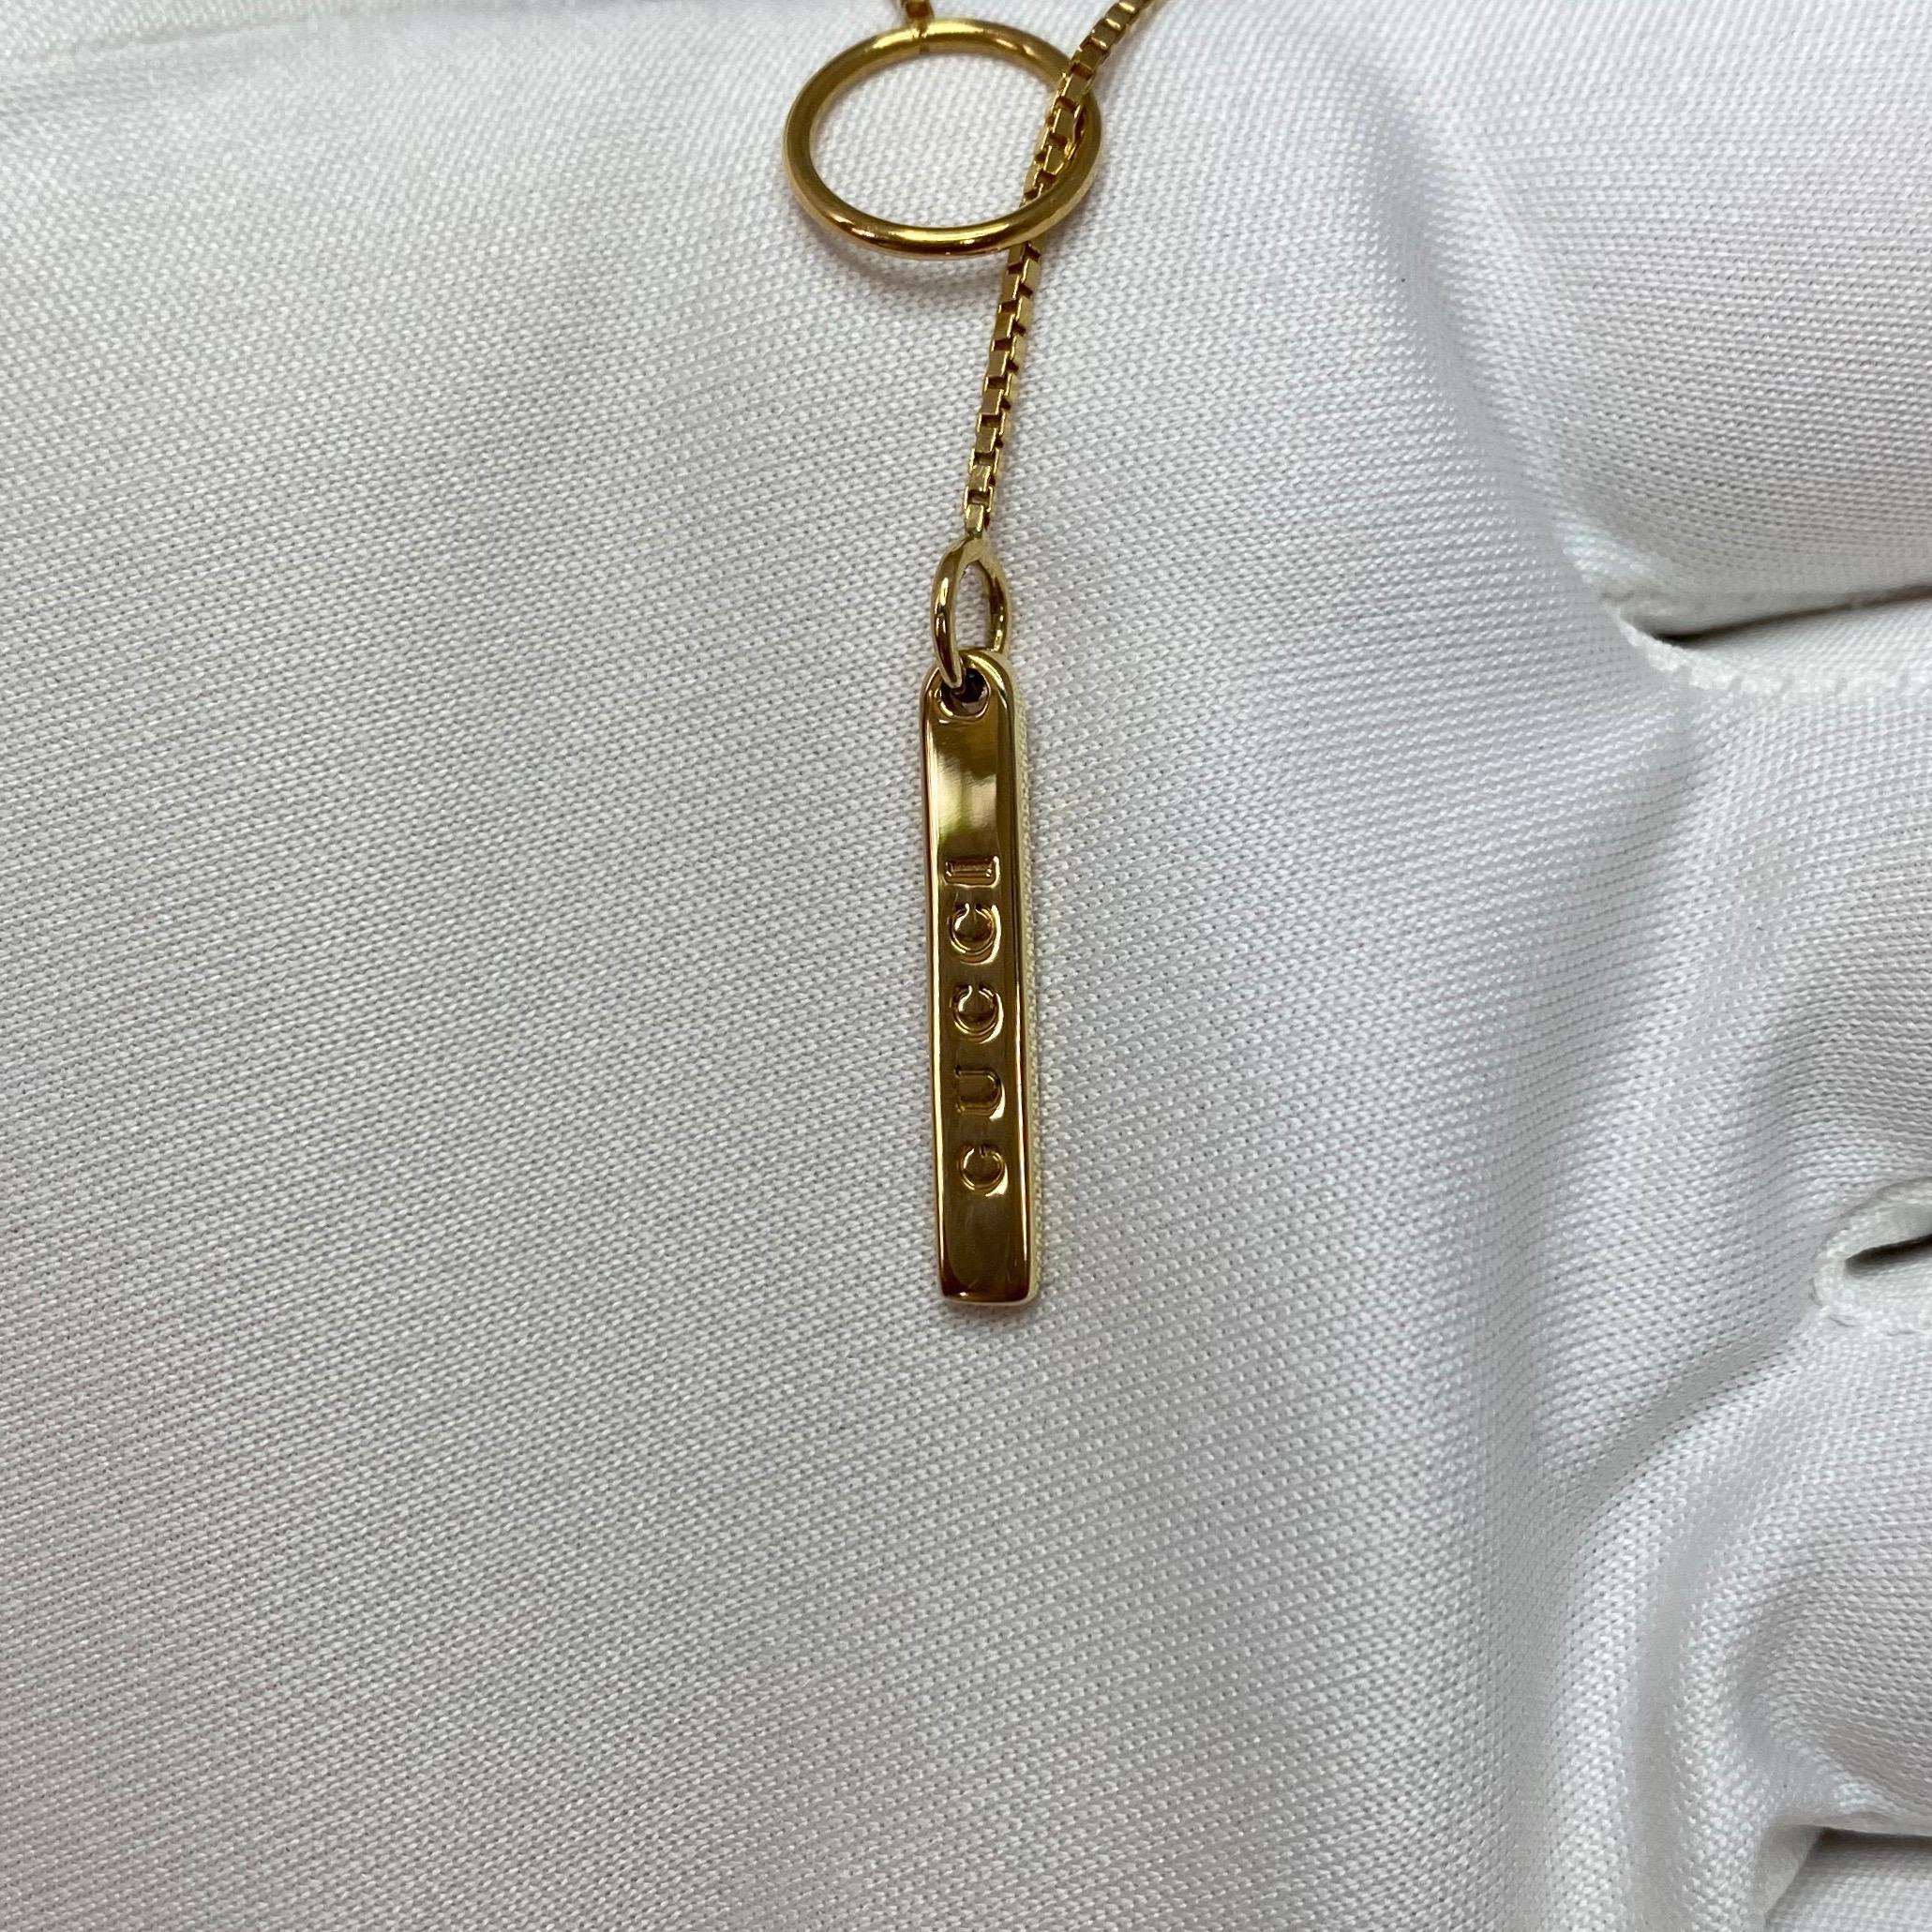 Gucci 18 Karat Yellow Gold Bar Lariat Pendant Necklace with Original Gucci Box 4